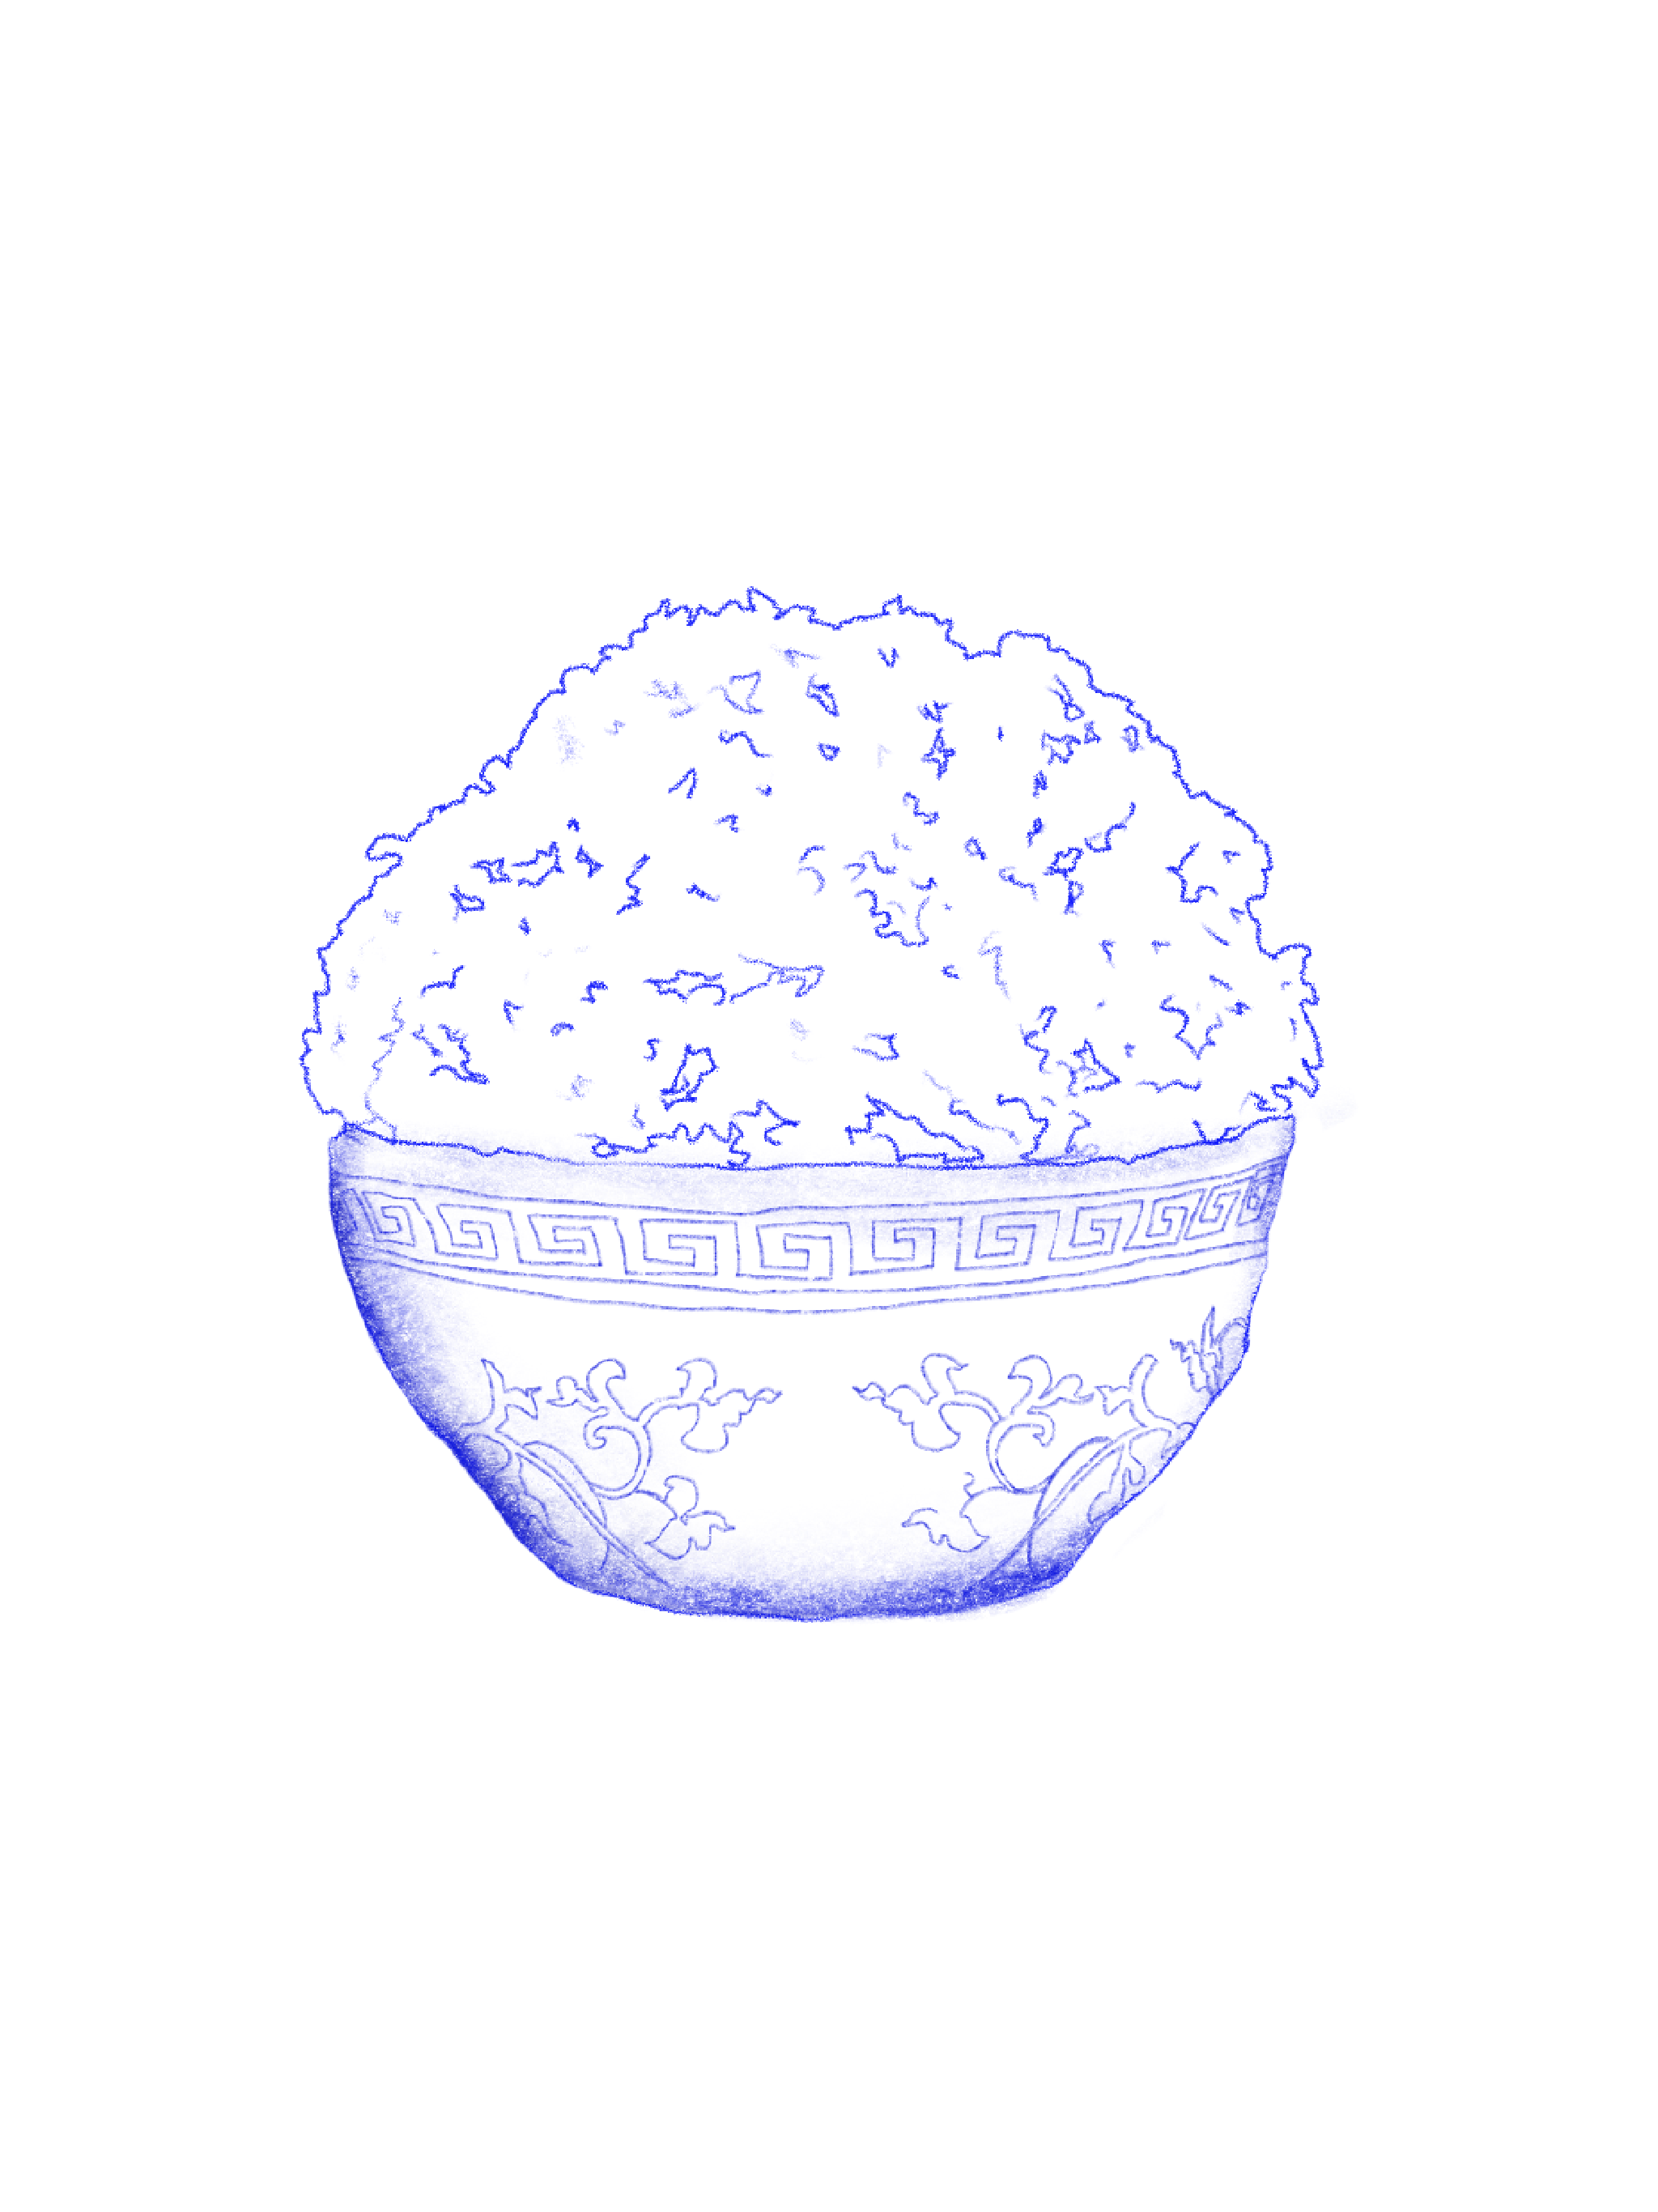 illustration of bowl of rice